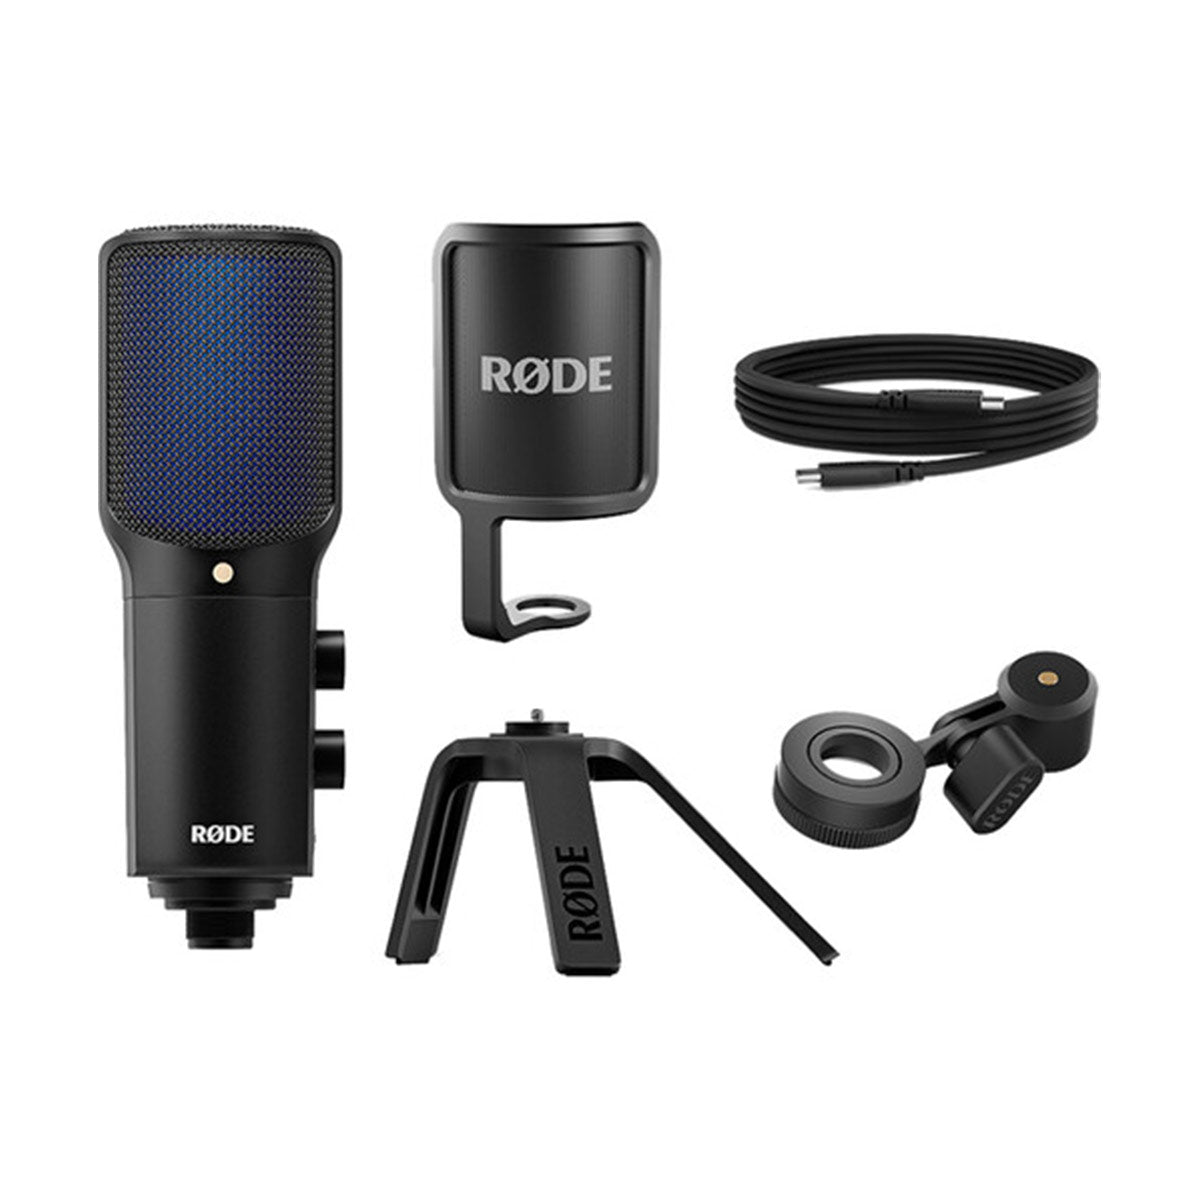 RODE NT-USB+ USB Microphone